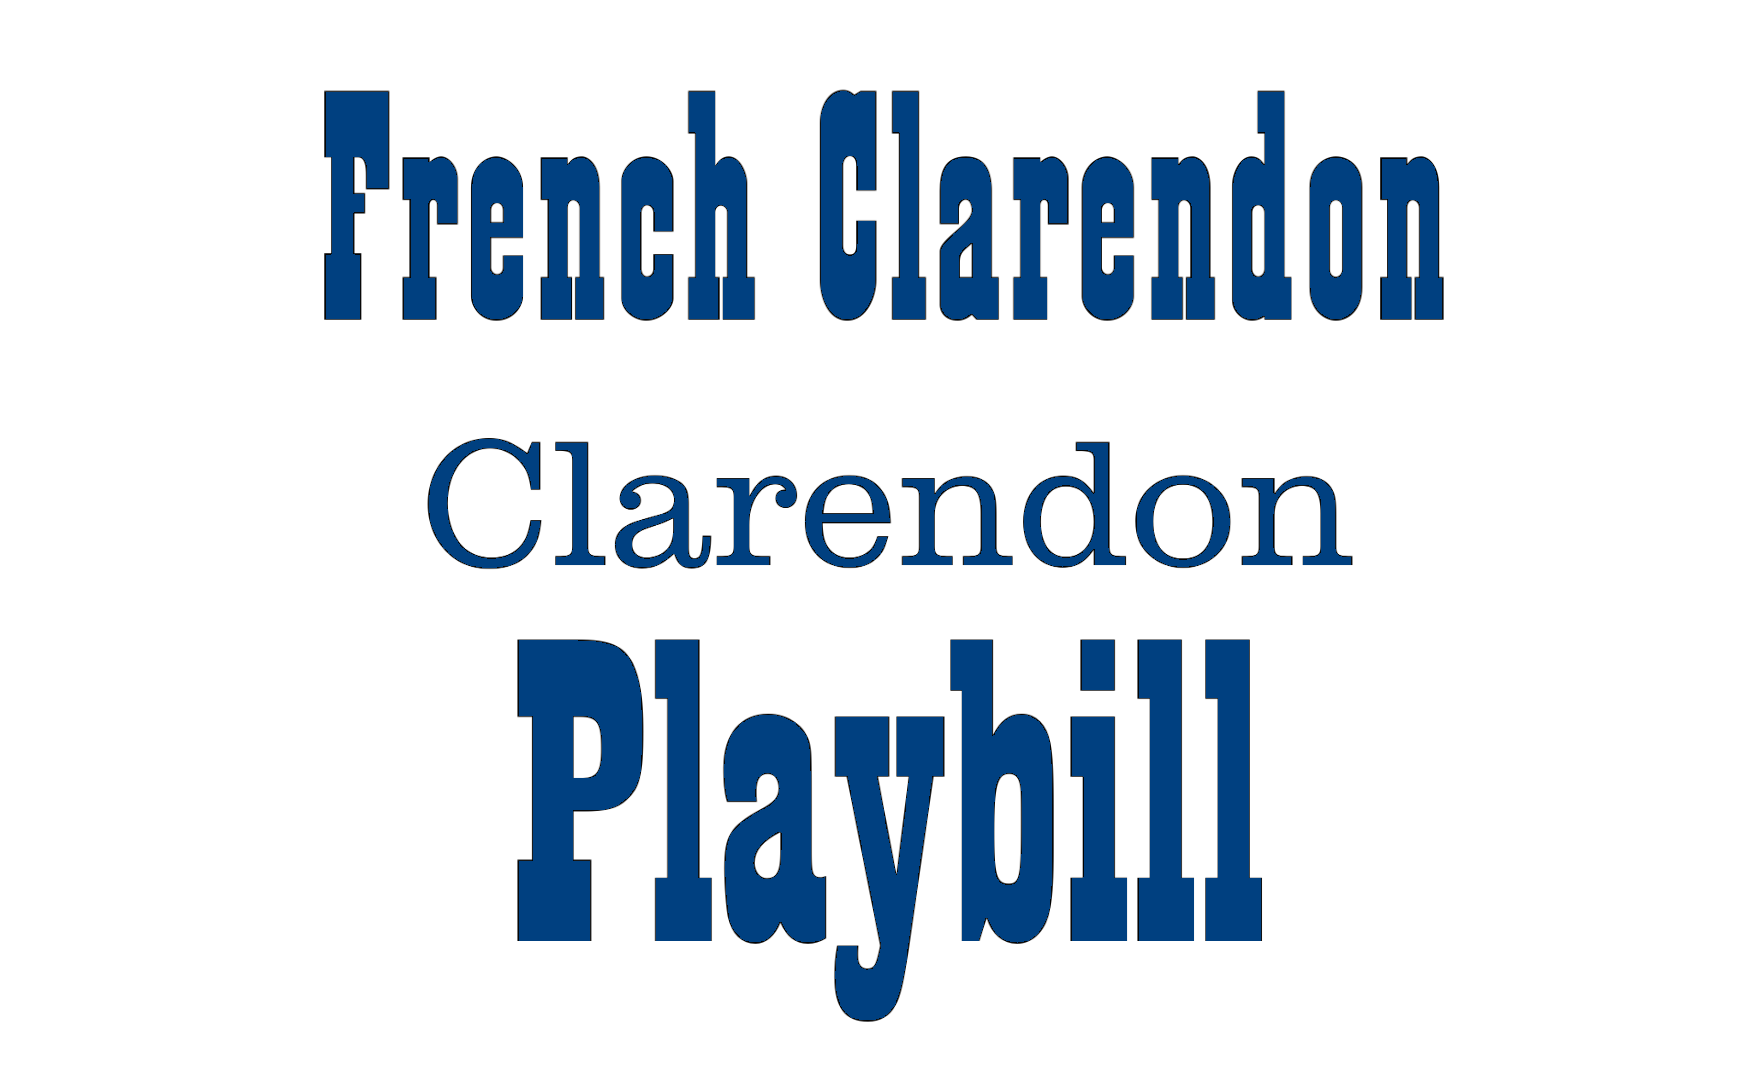 Examples of clarendon serifs